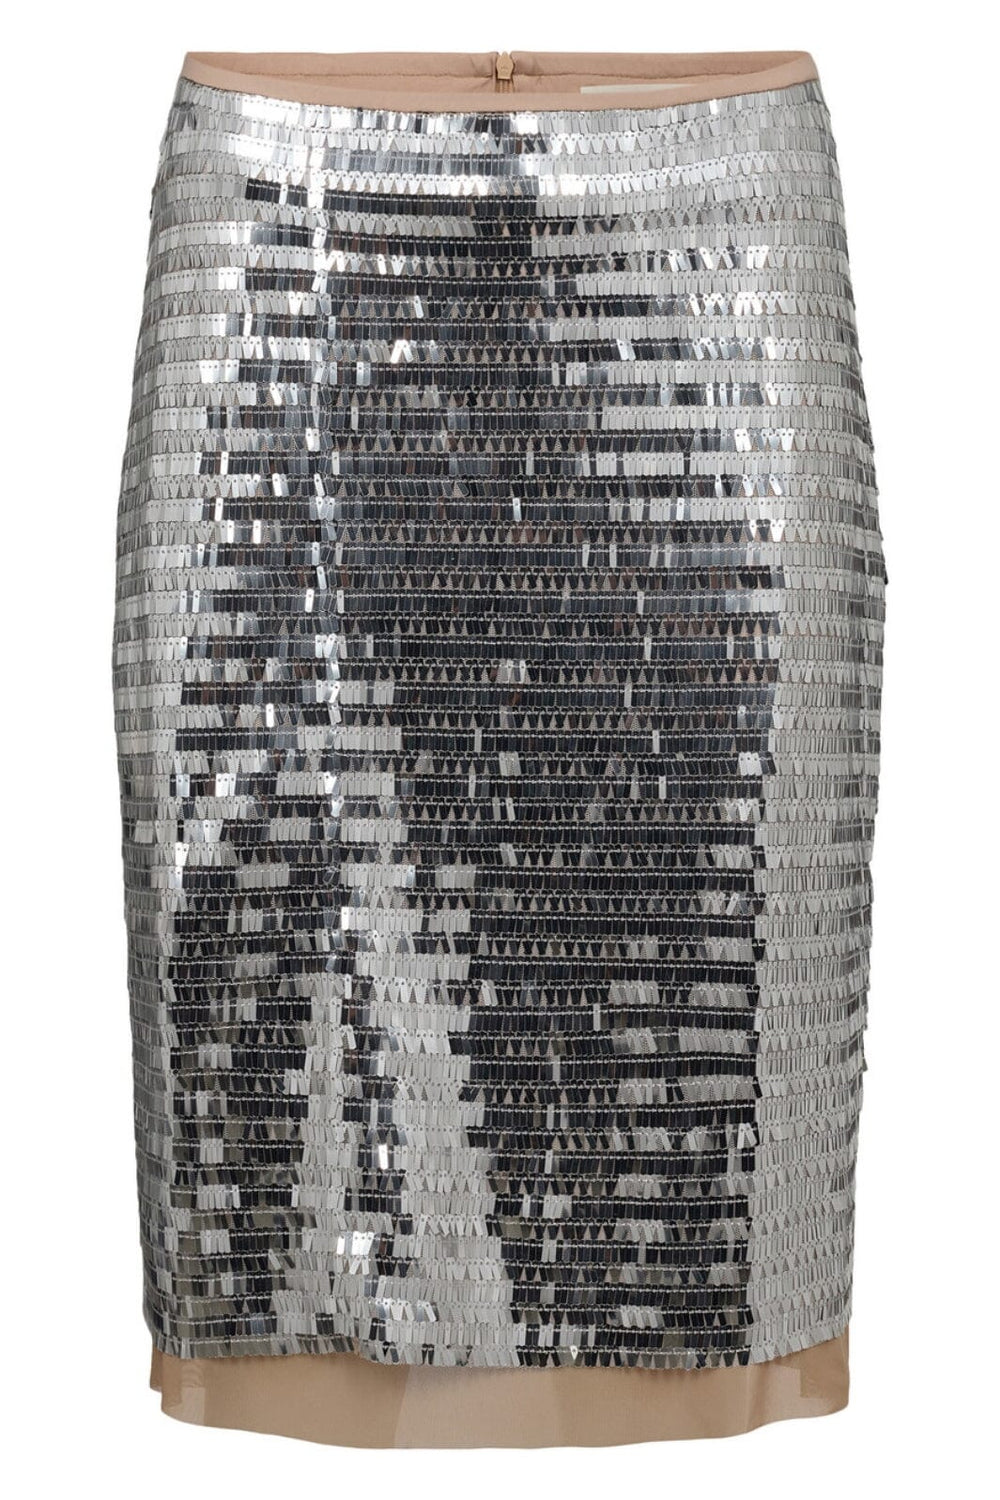 Sofie Schnoor - S241400 Skirt - Silver Nederdele 